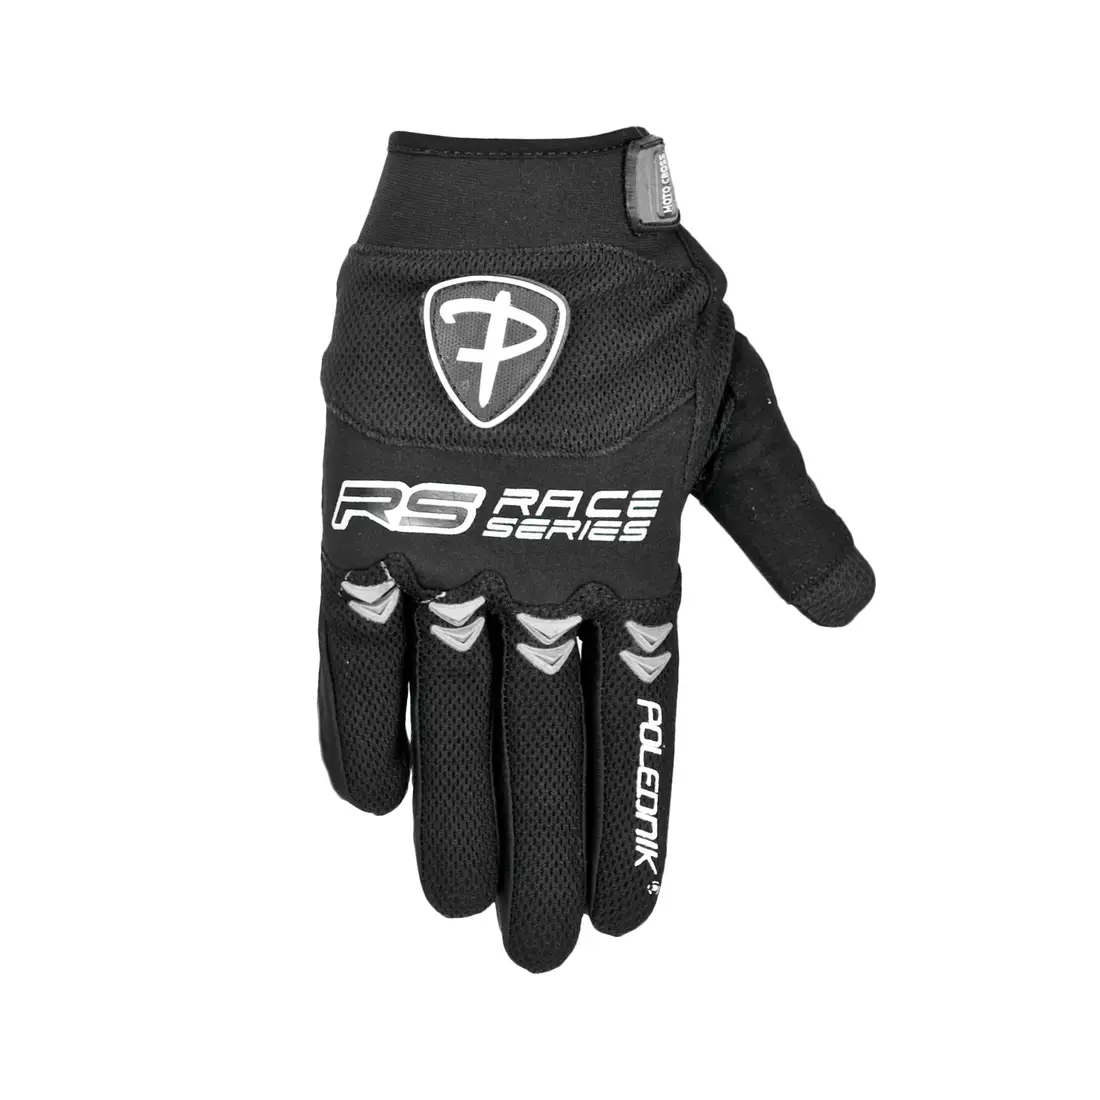 POLEDNIK MX-Handschuhe, Farbe: schwarz